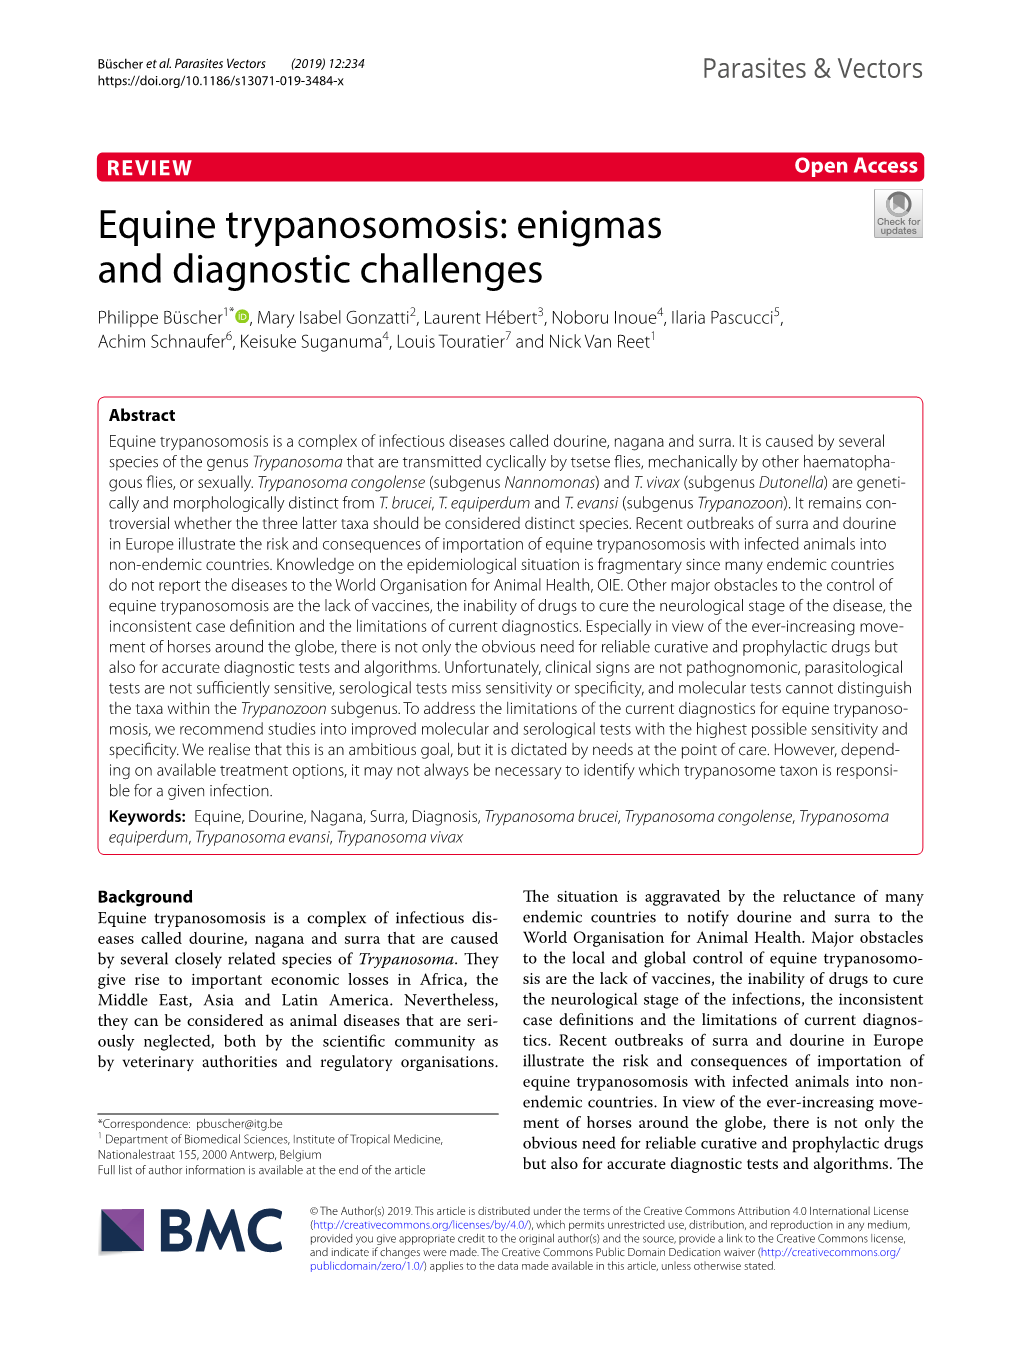 Equine Trypanosomosis: Enigmas and Diagnostic Challenges